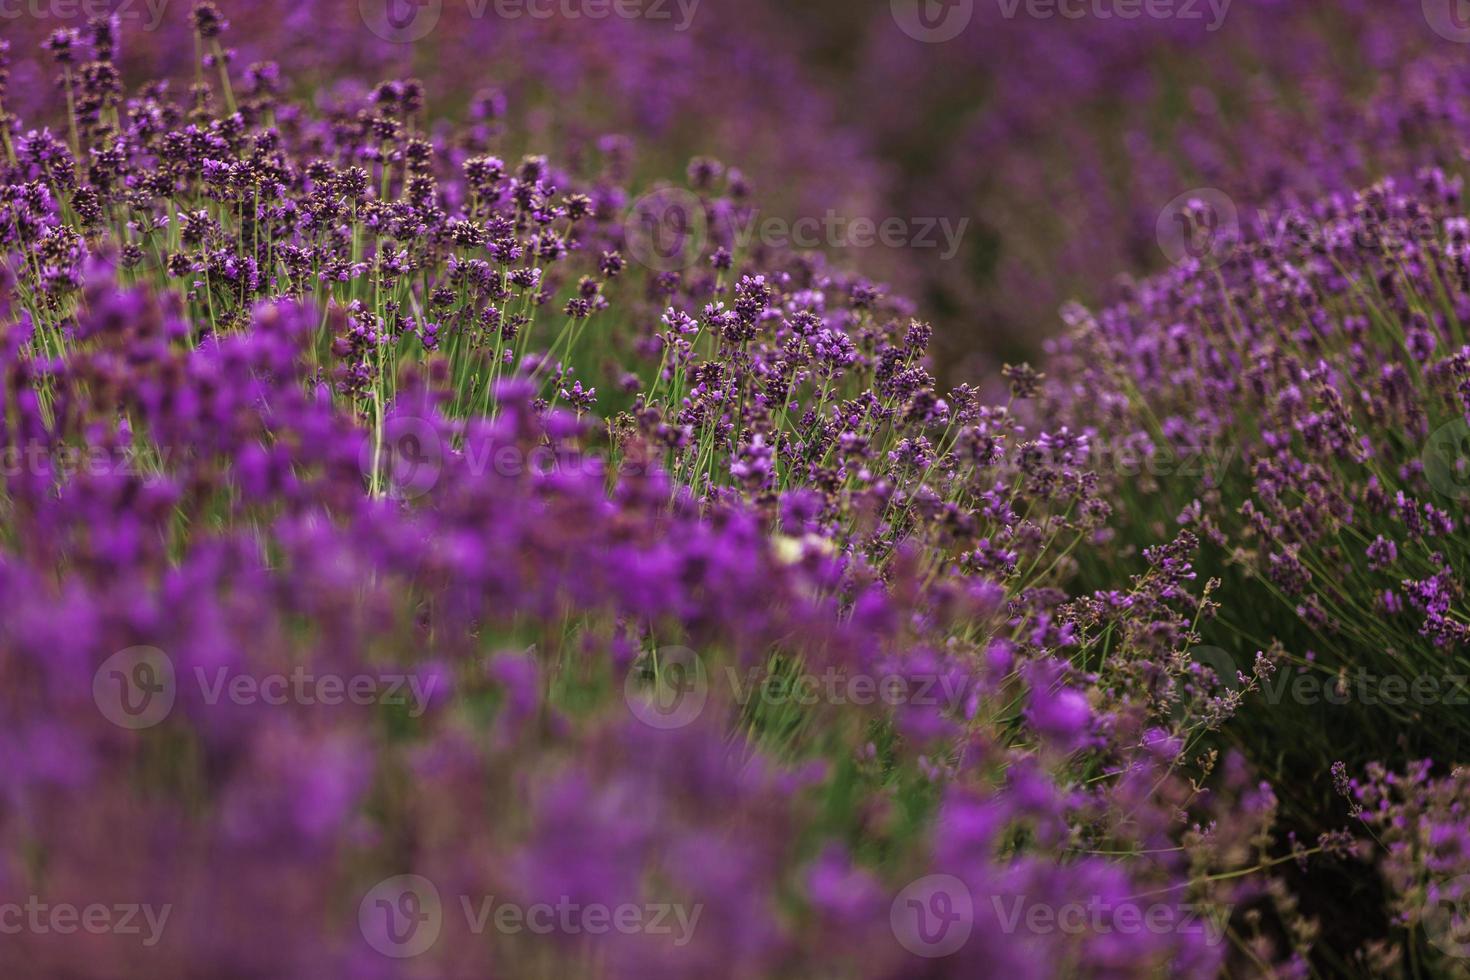 lavendel fält i Provence, blommande violett doftande lavendel blommor. växande lavendel som svänger på vinden över solnedgångshimlen, foto